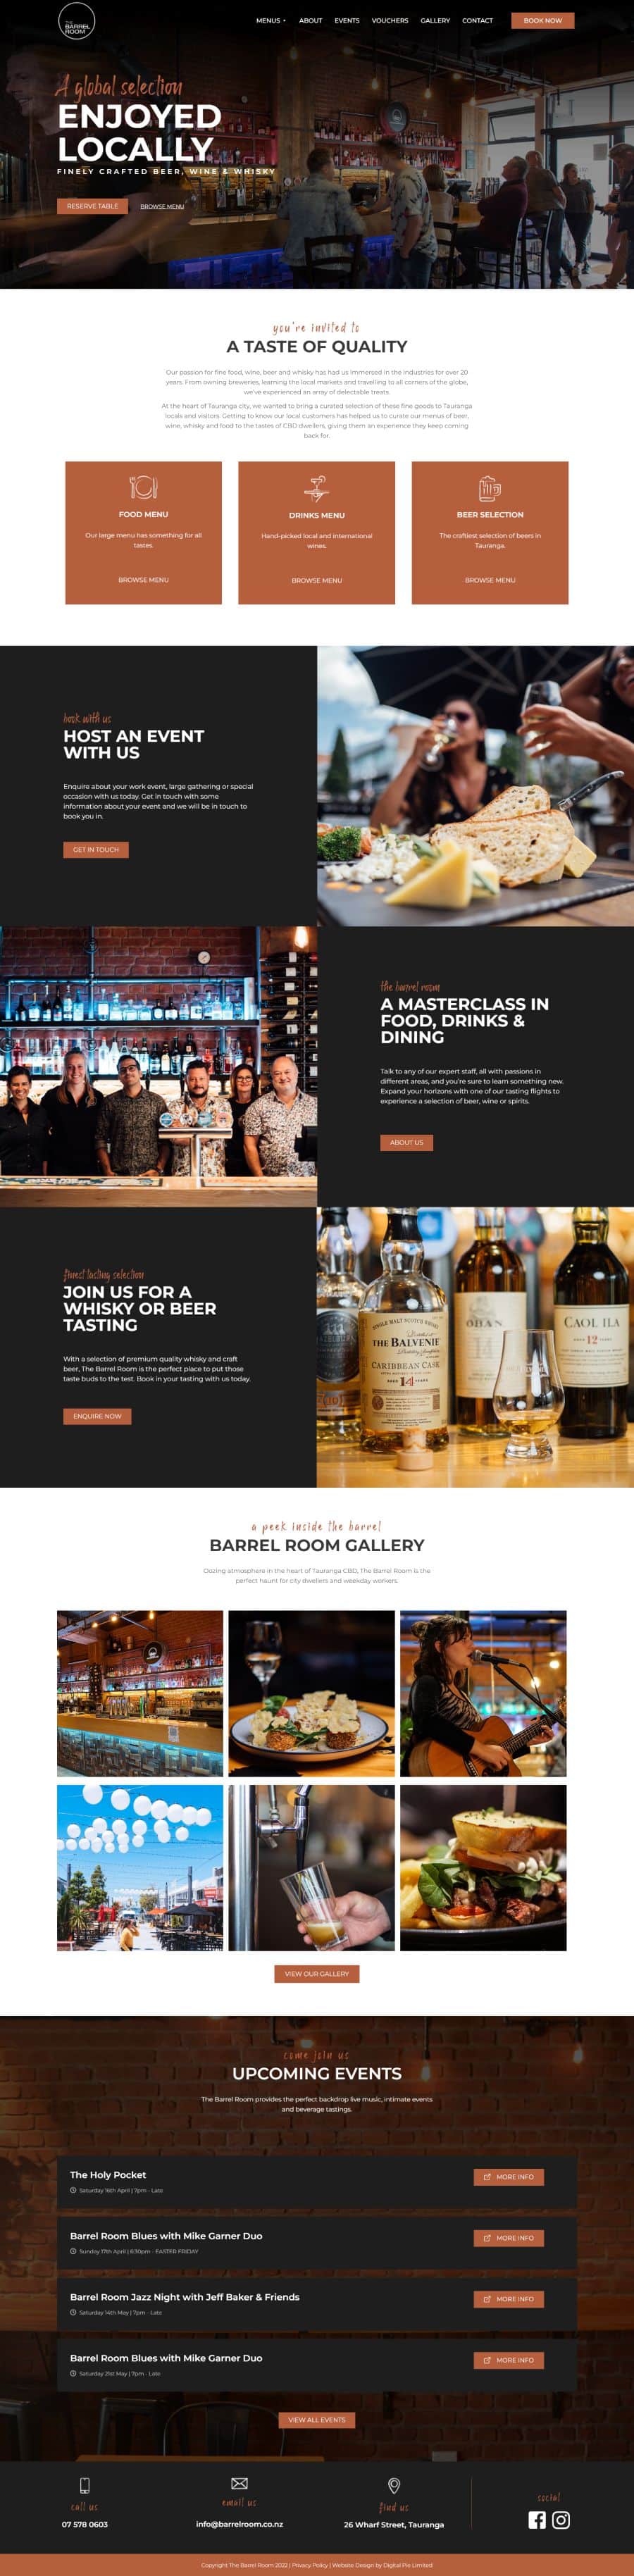 barrel room portfolio